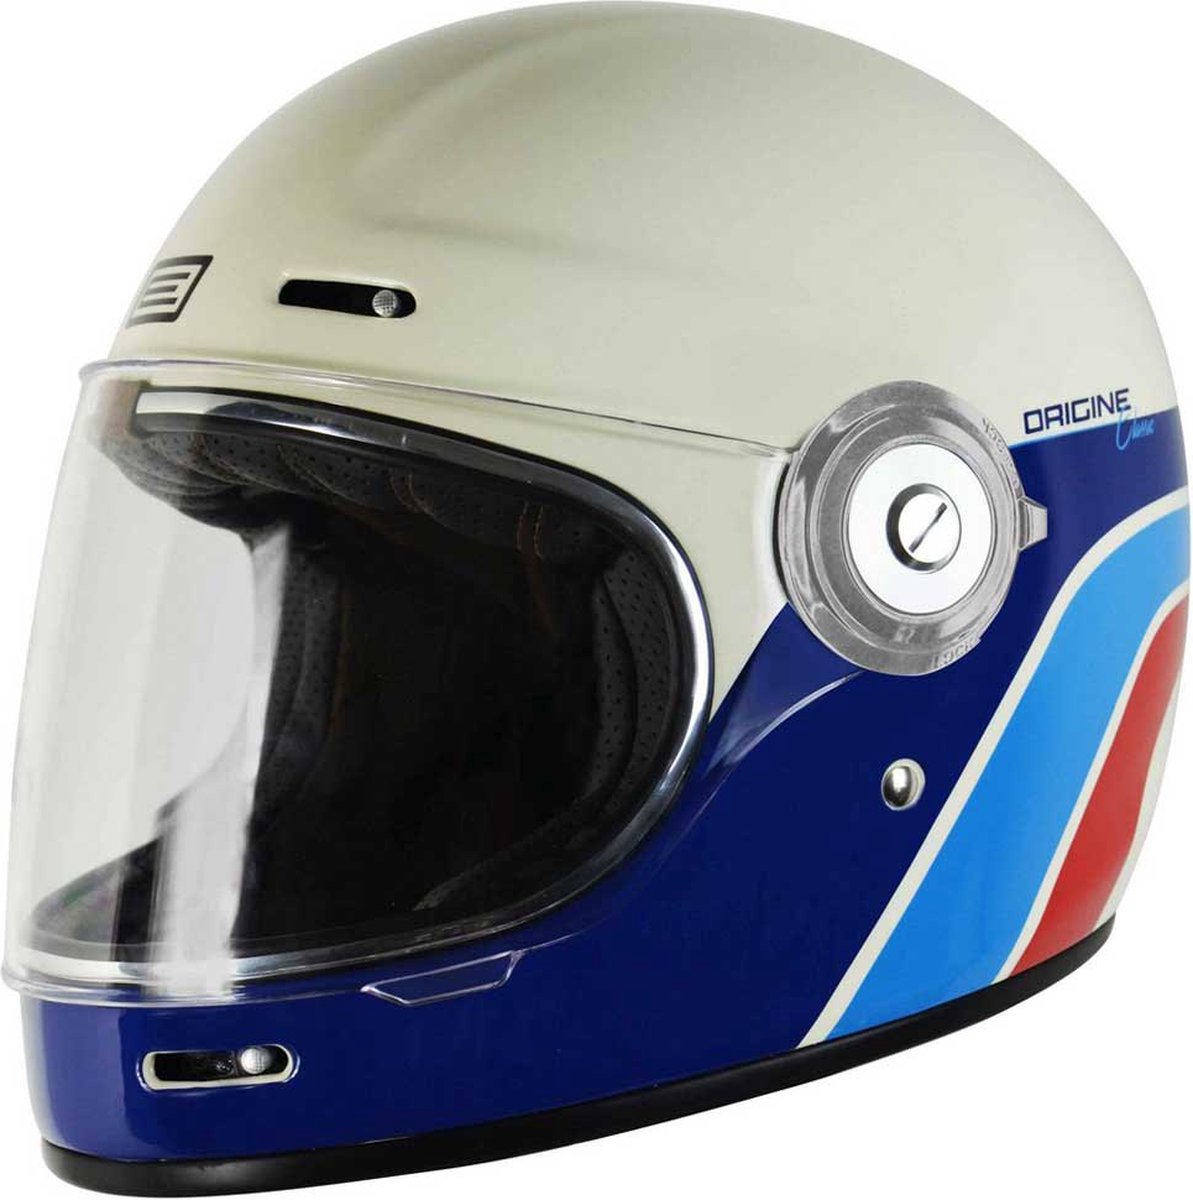 ORIGINE Vega Classic Volledige Gezicht Helm -White XL